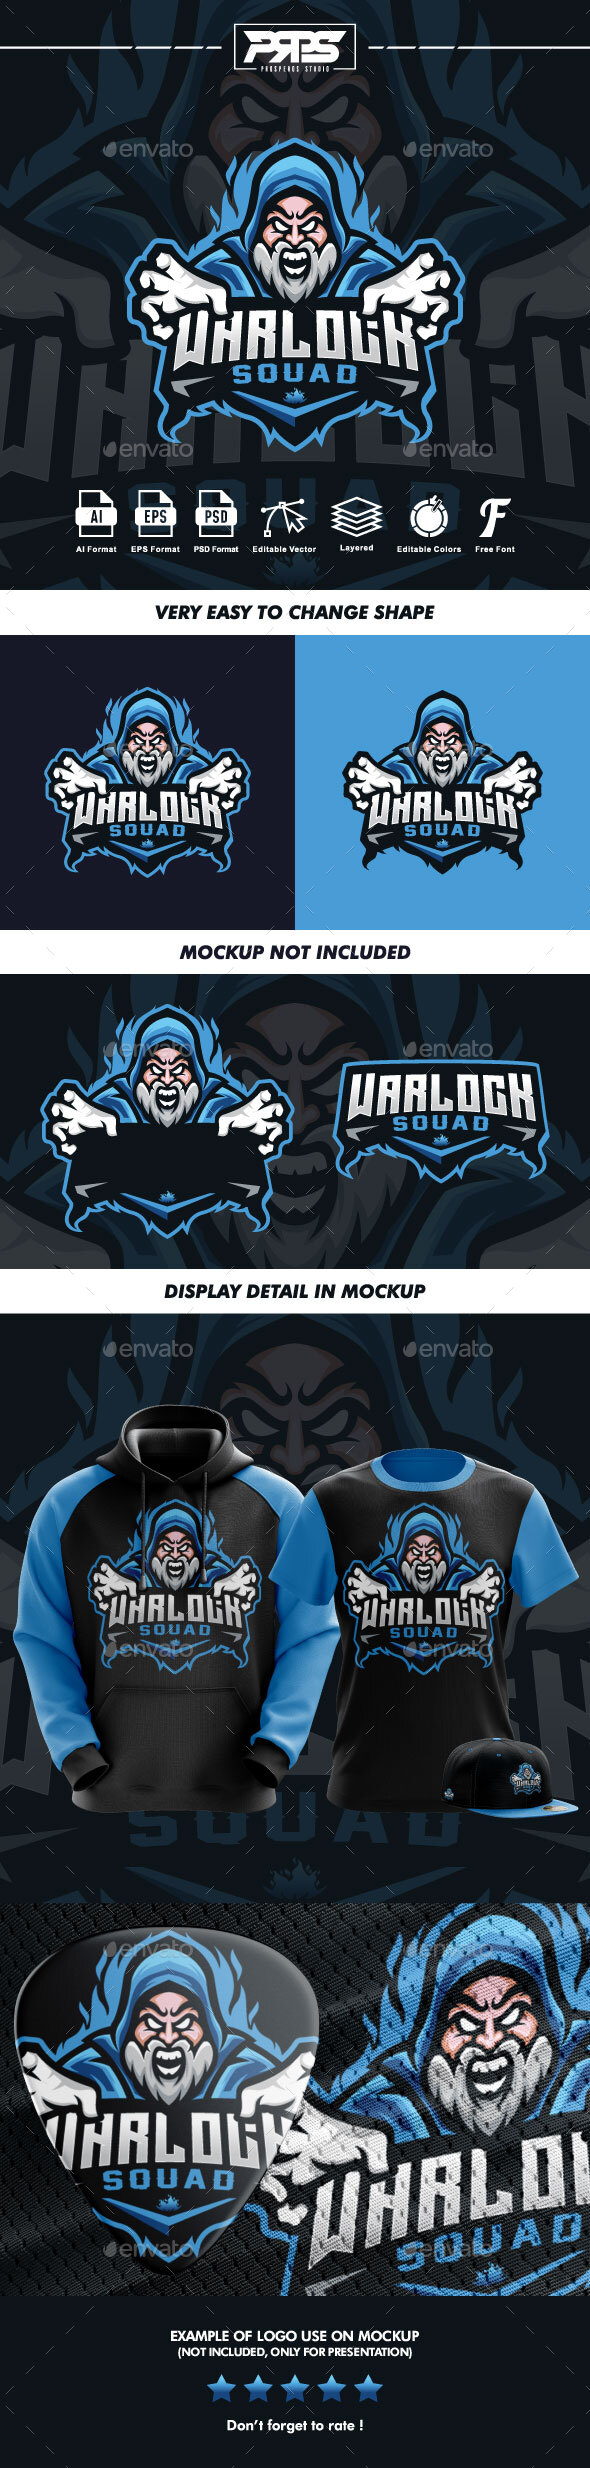 Warlock Esport Logo